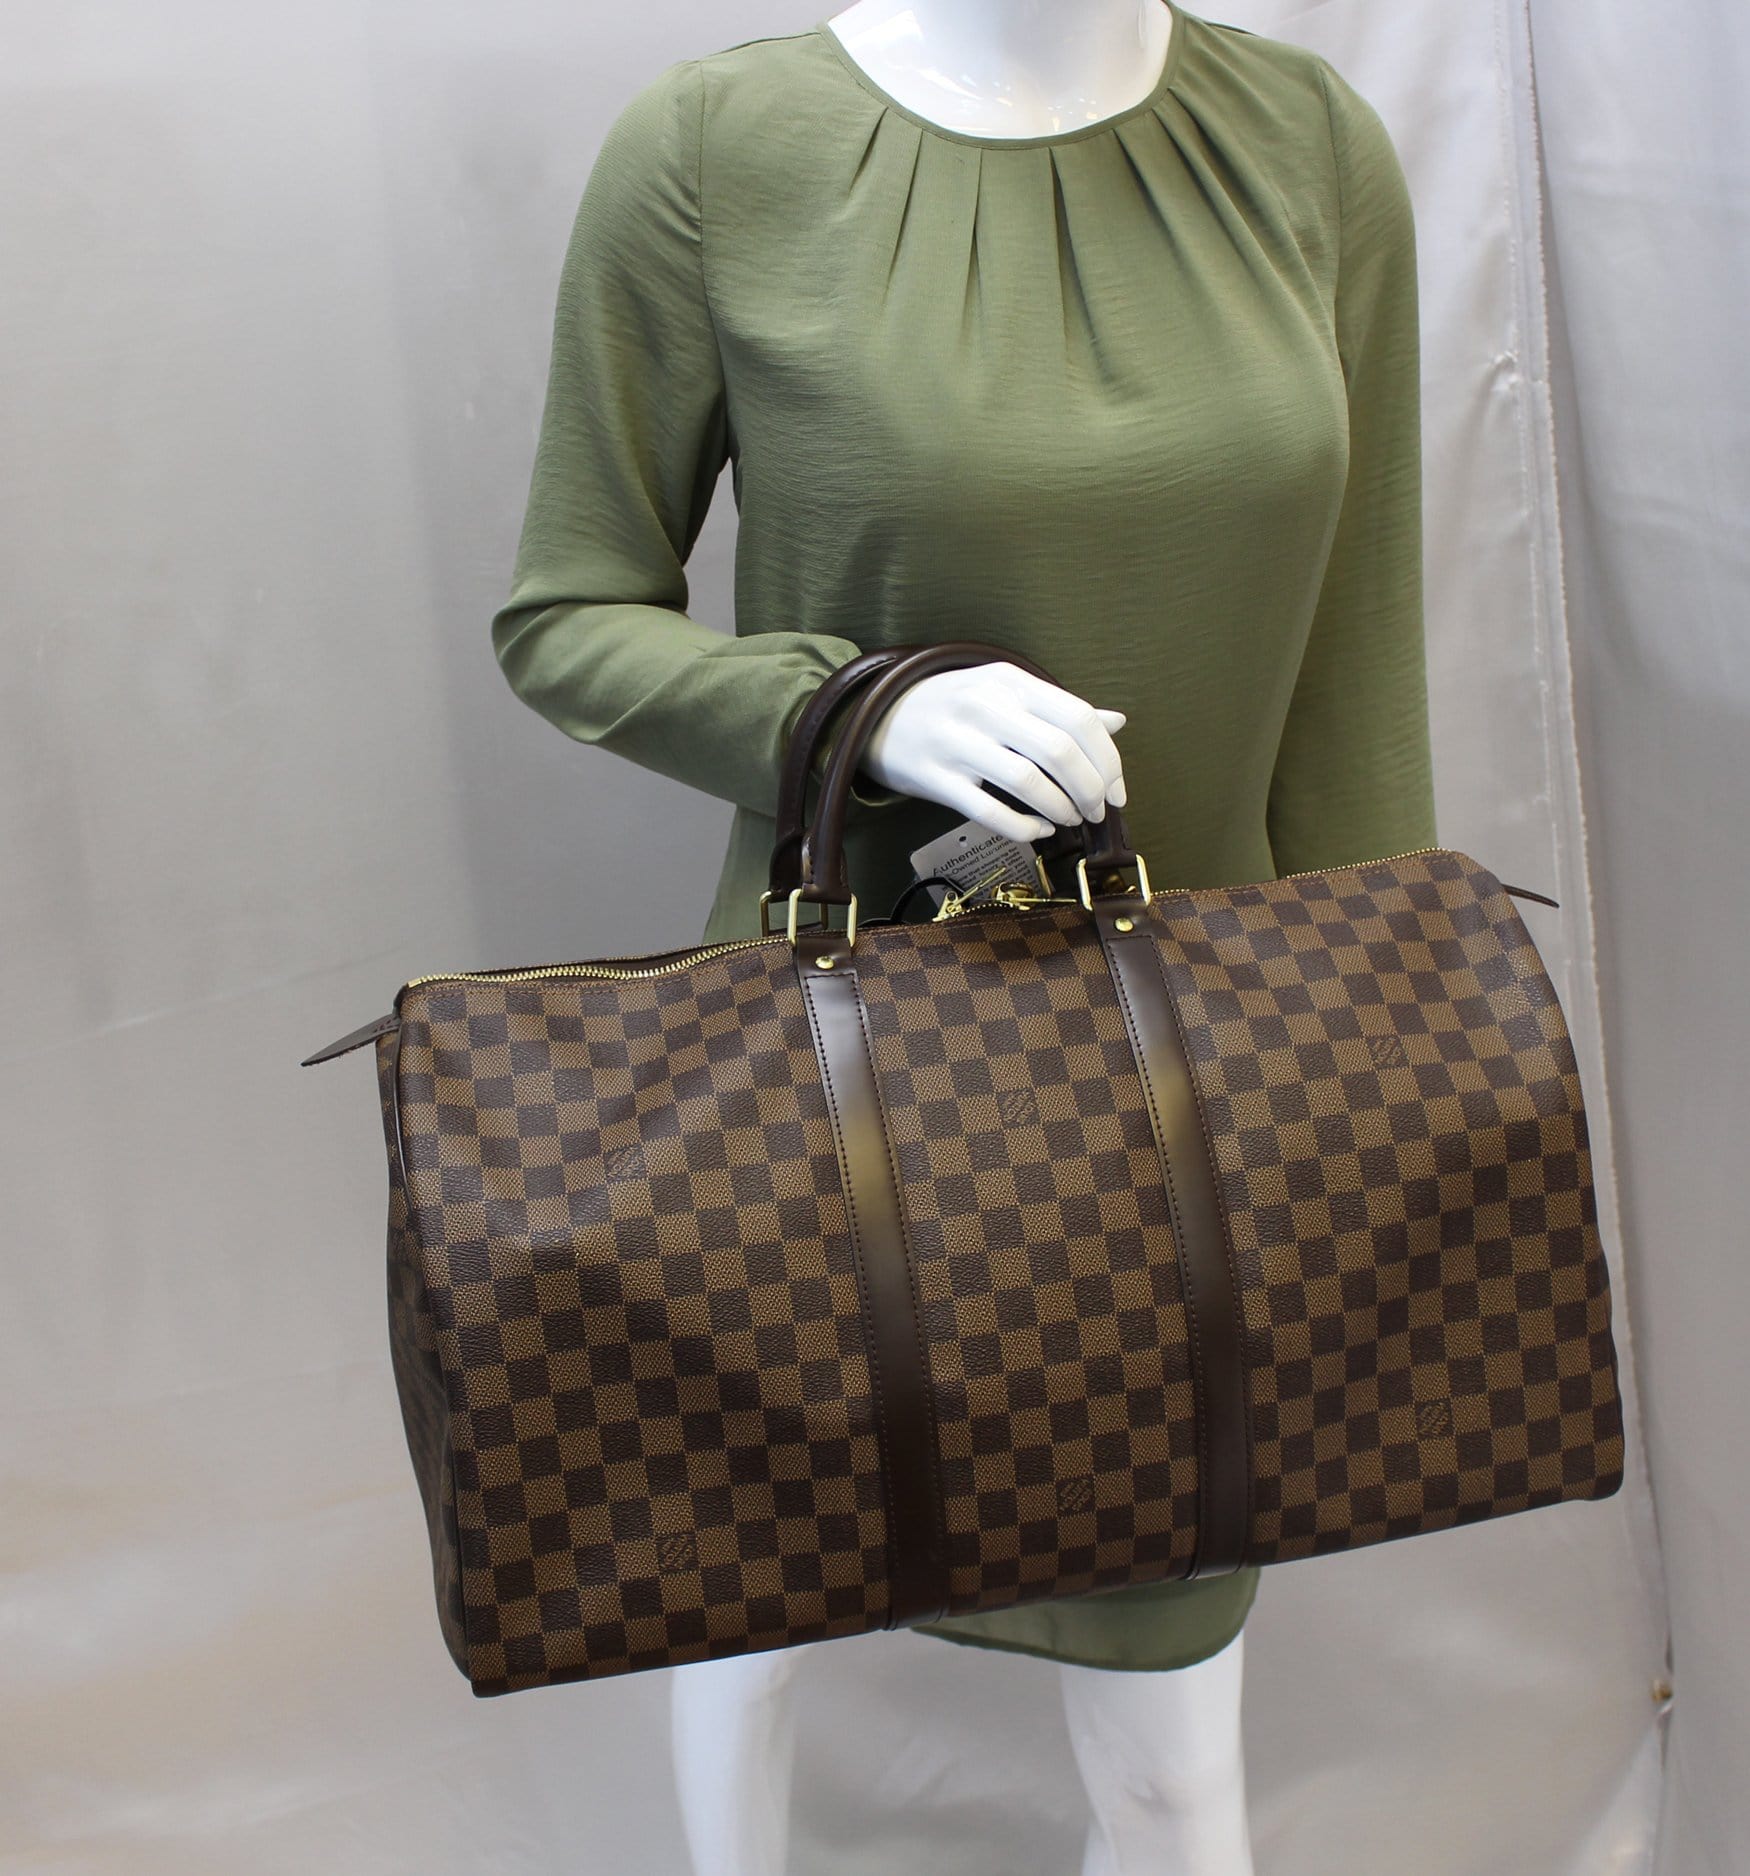 Louis Vuitton Keepall 45 Monogram torba podróżna